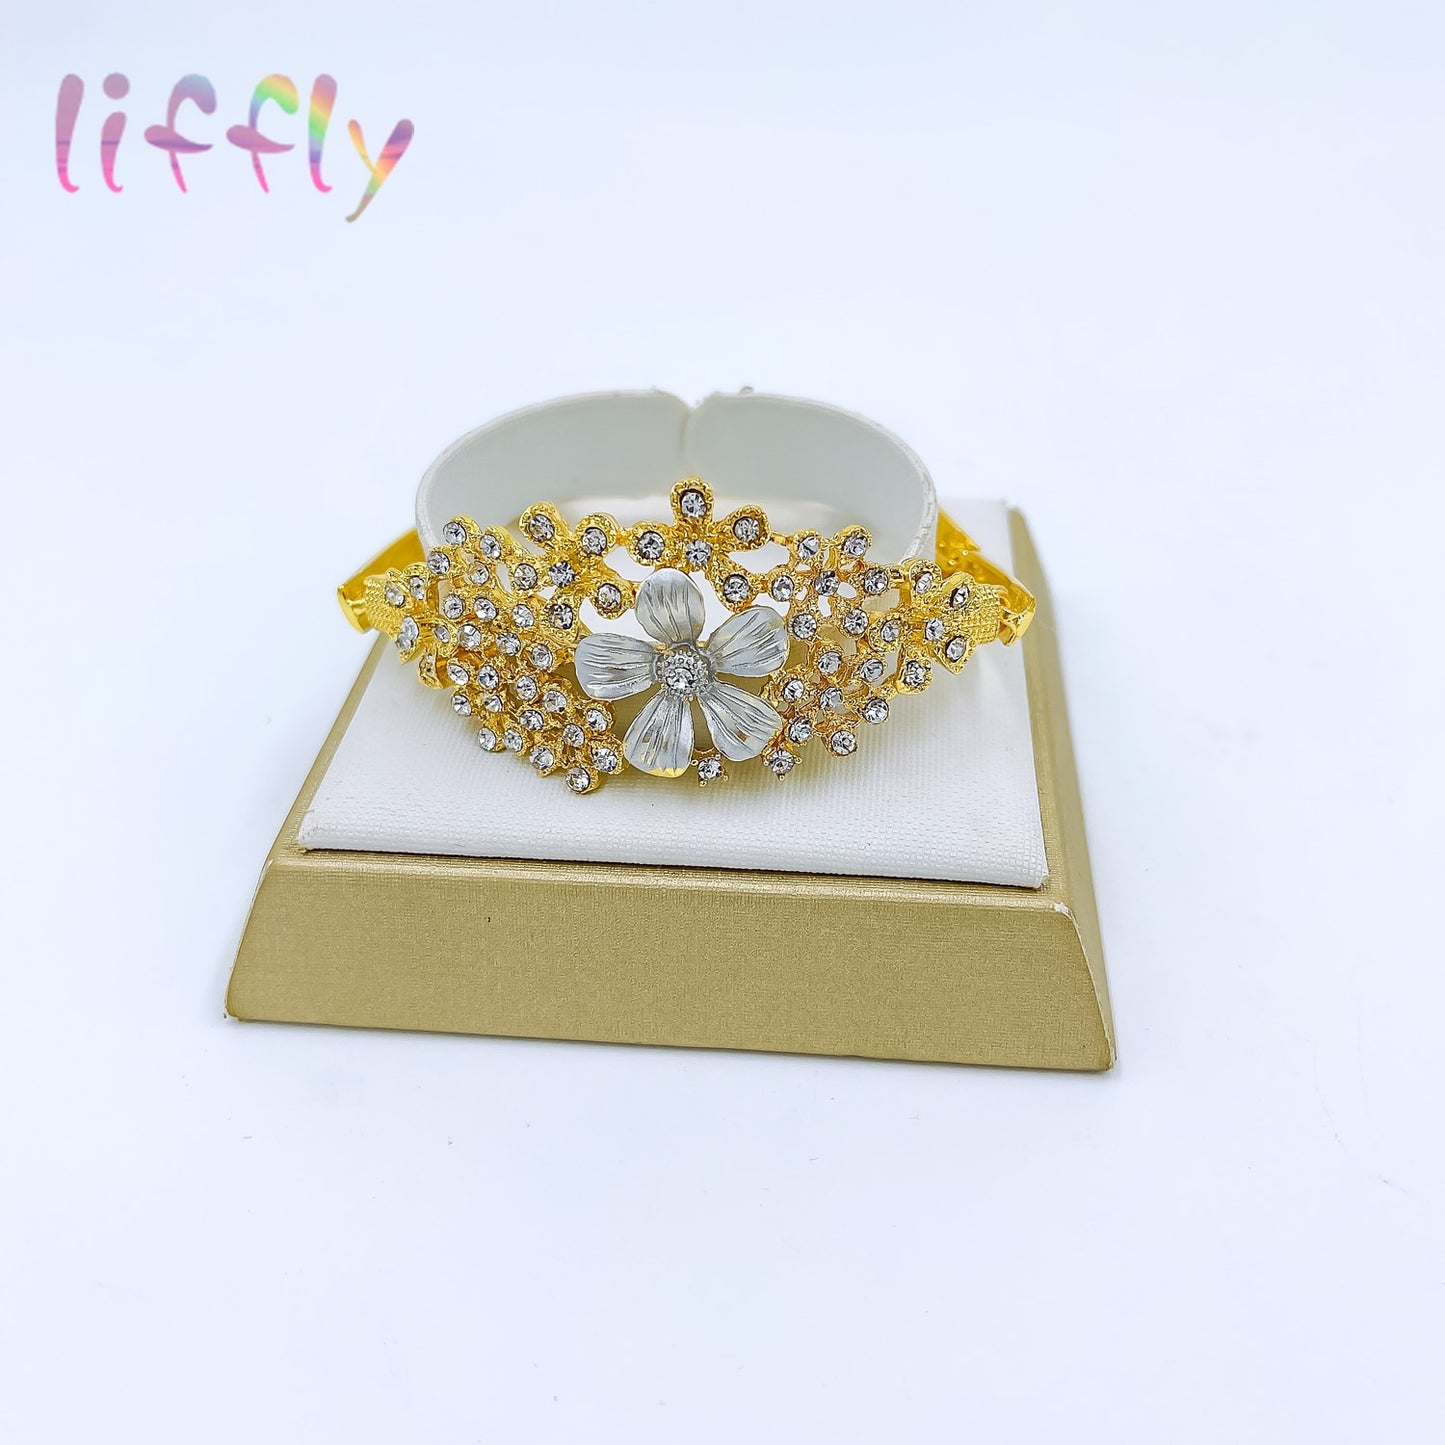 Liffly Dubai Elegant Bridal Wedding Jewelry Flower Necklace Bracelet Earrings Ring African Fashion Jewelry Sets Women Gift